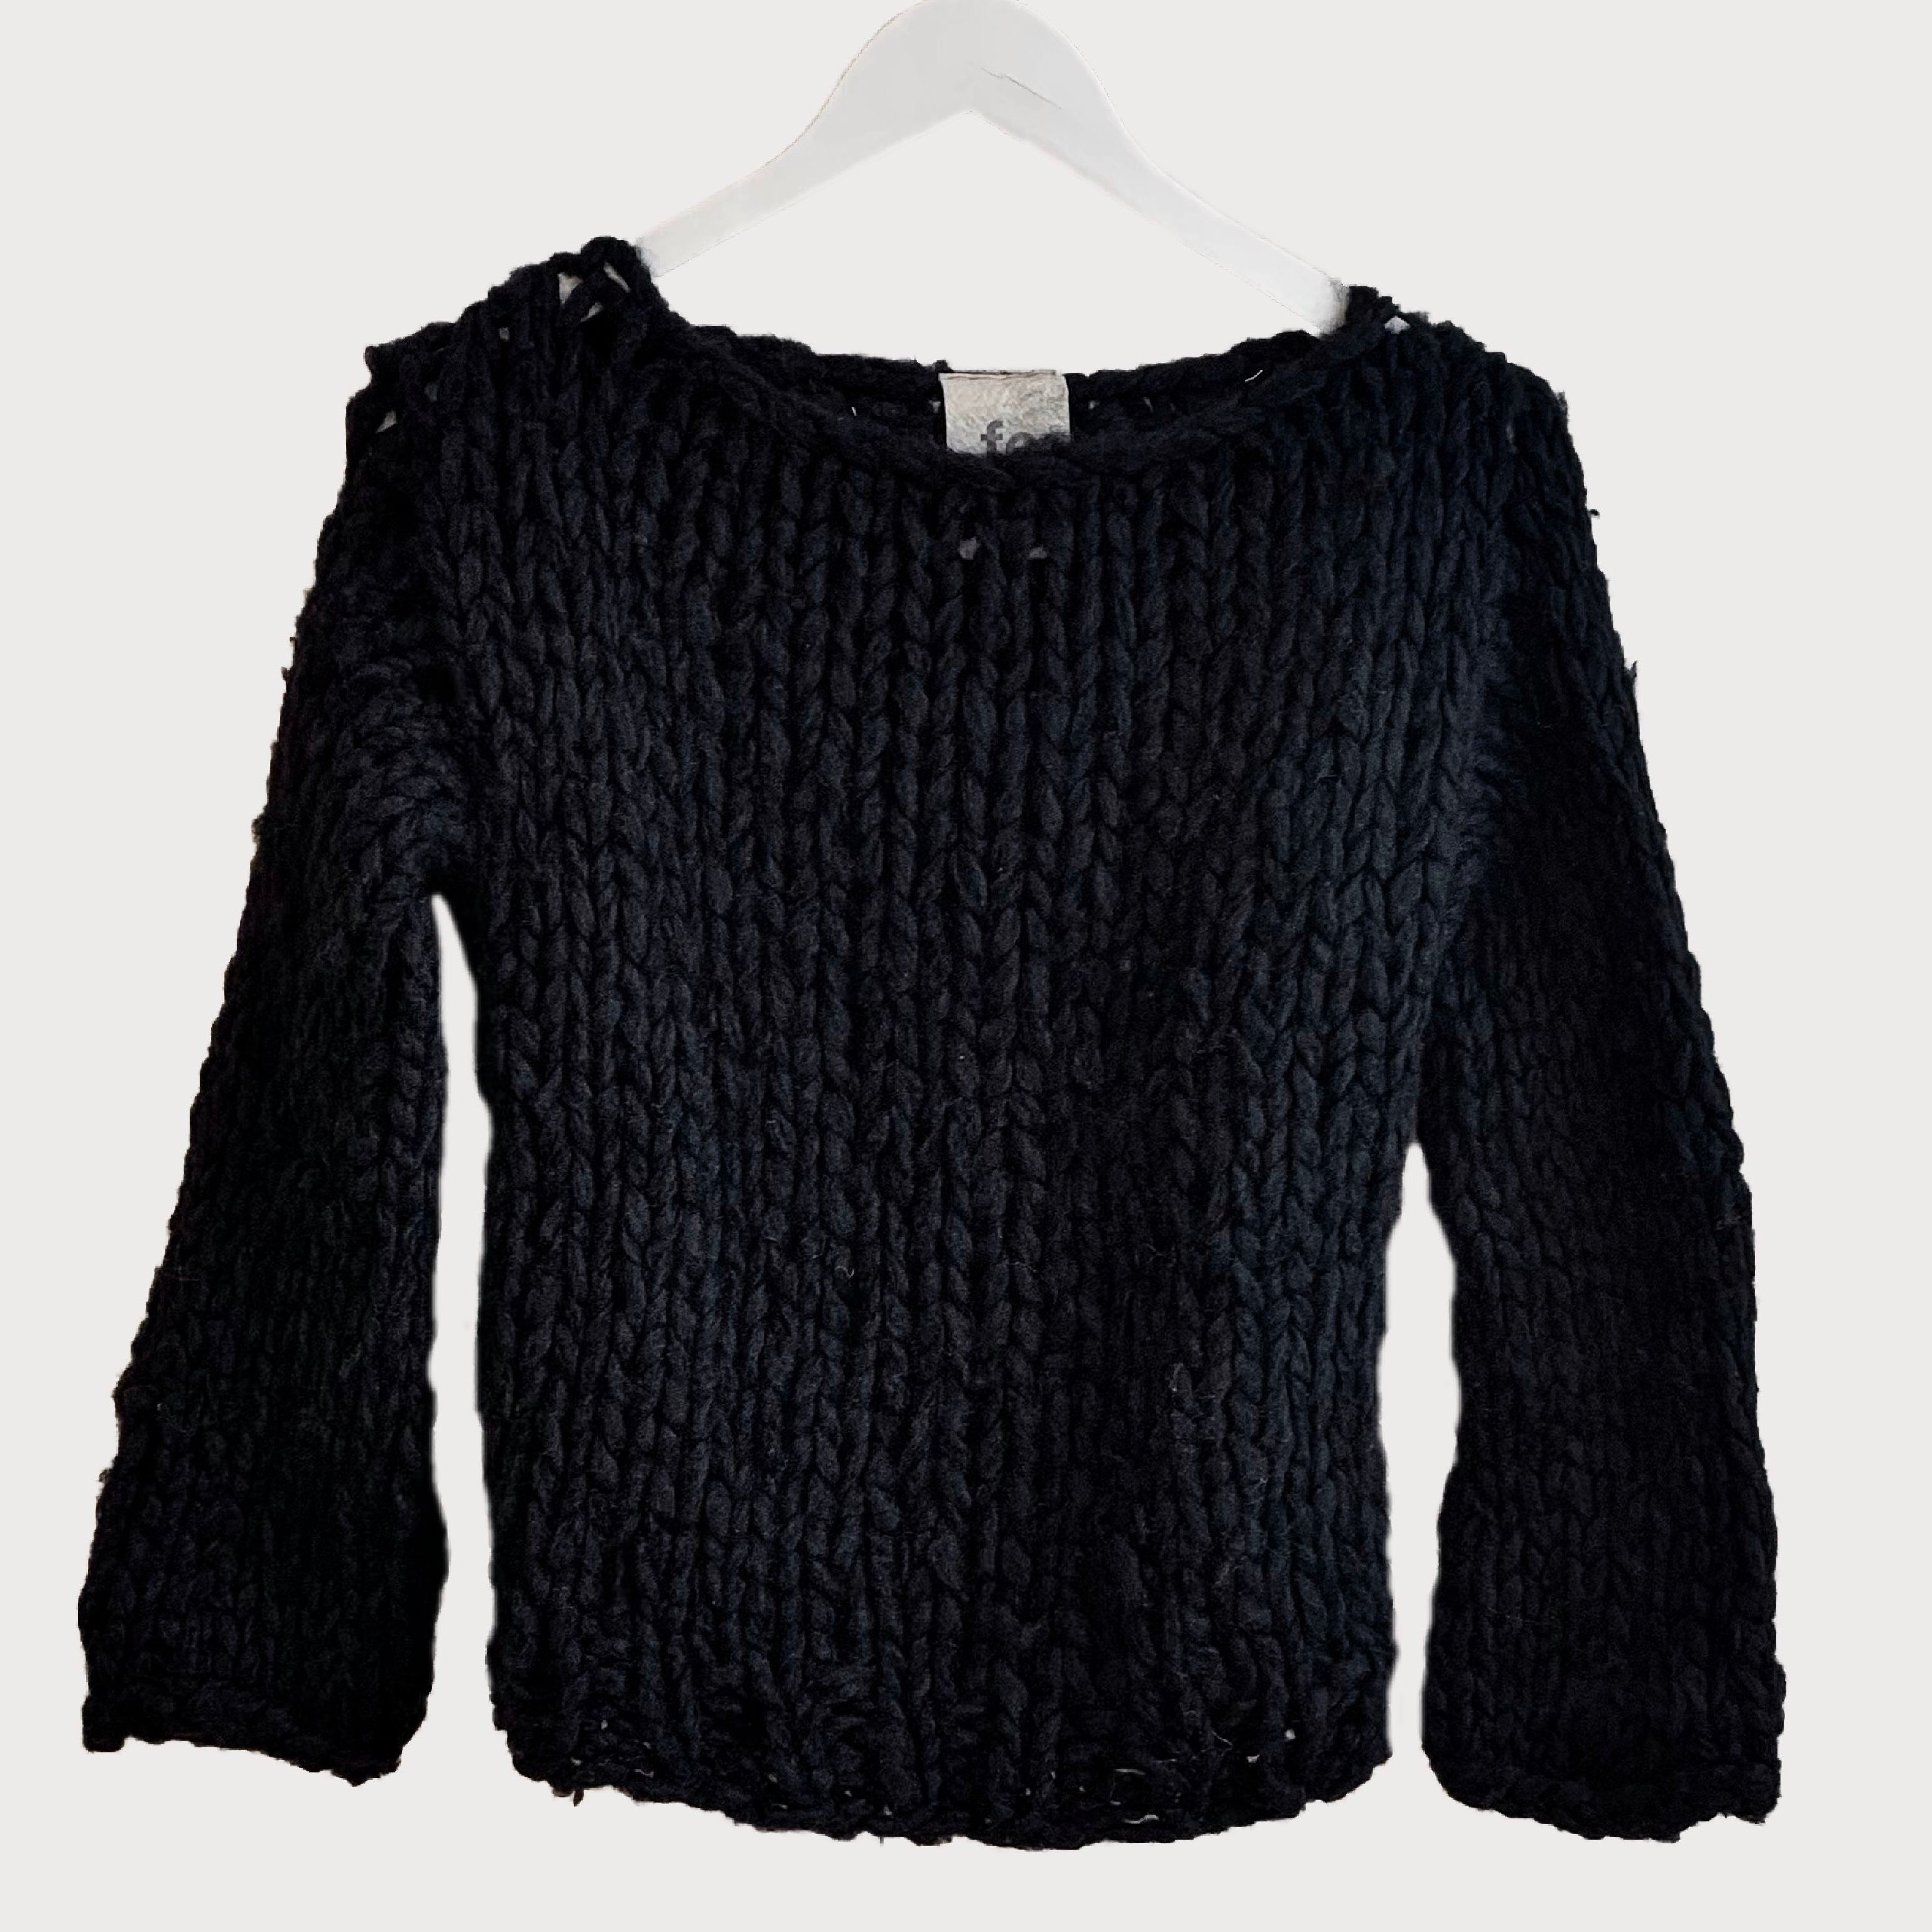   Cashmere Sweater  